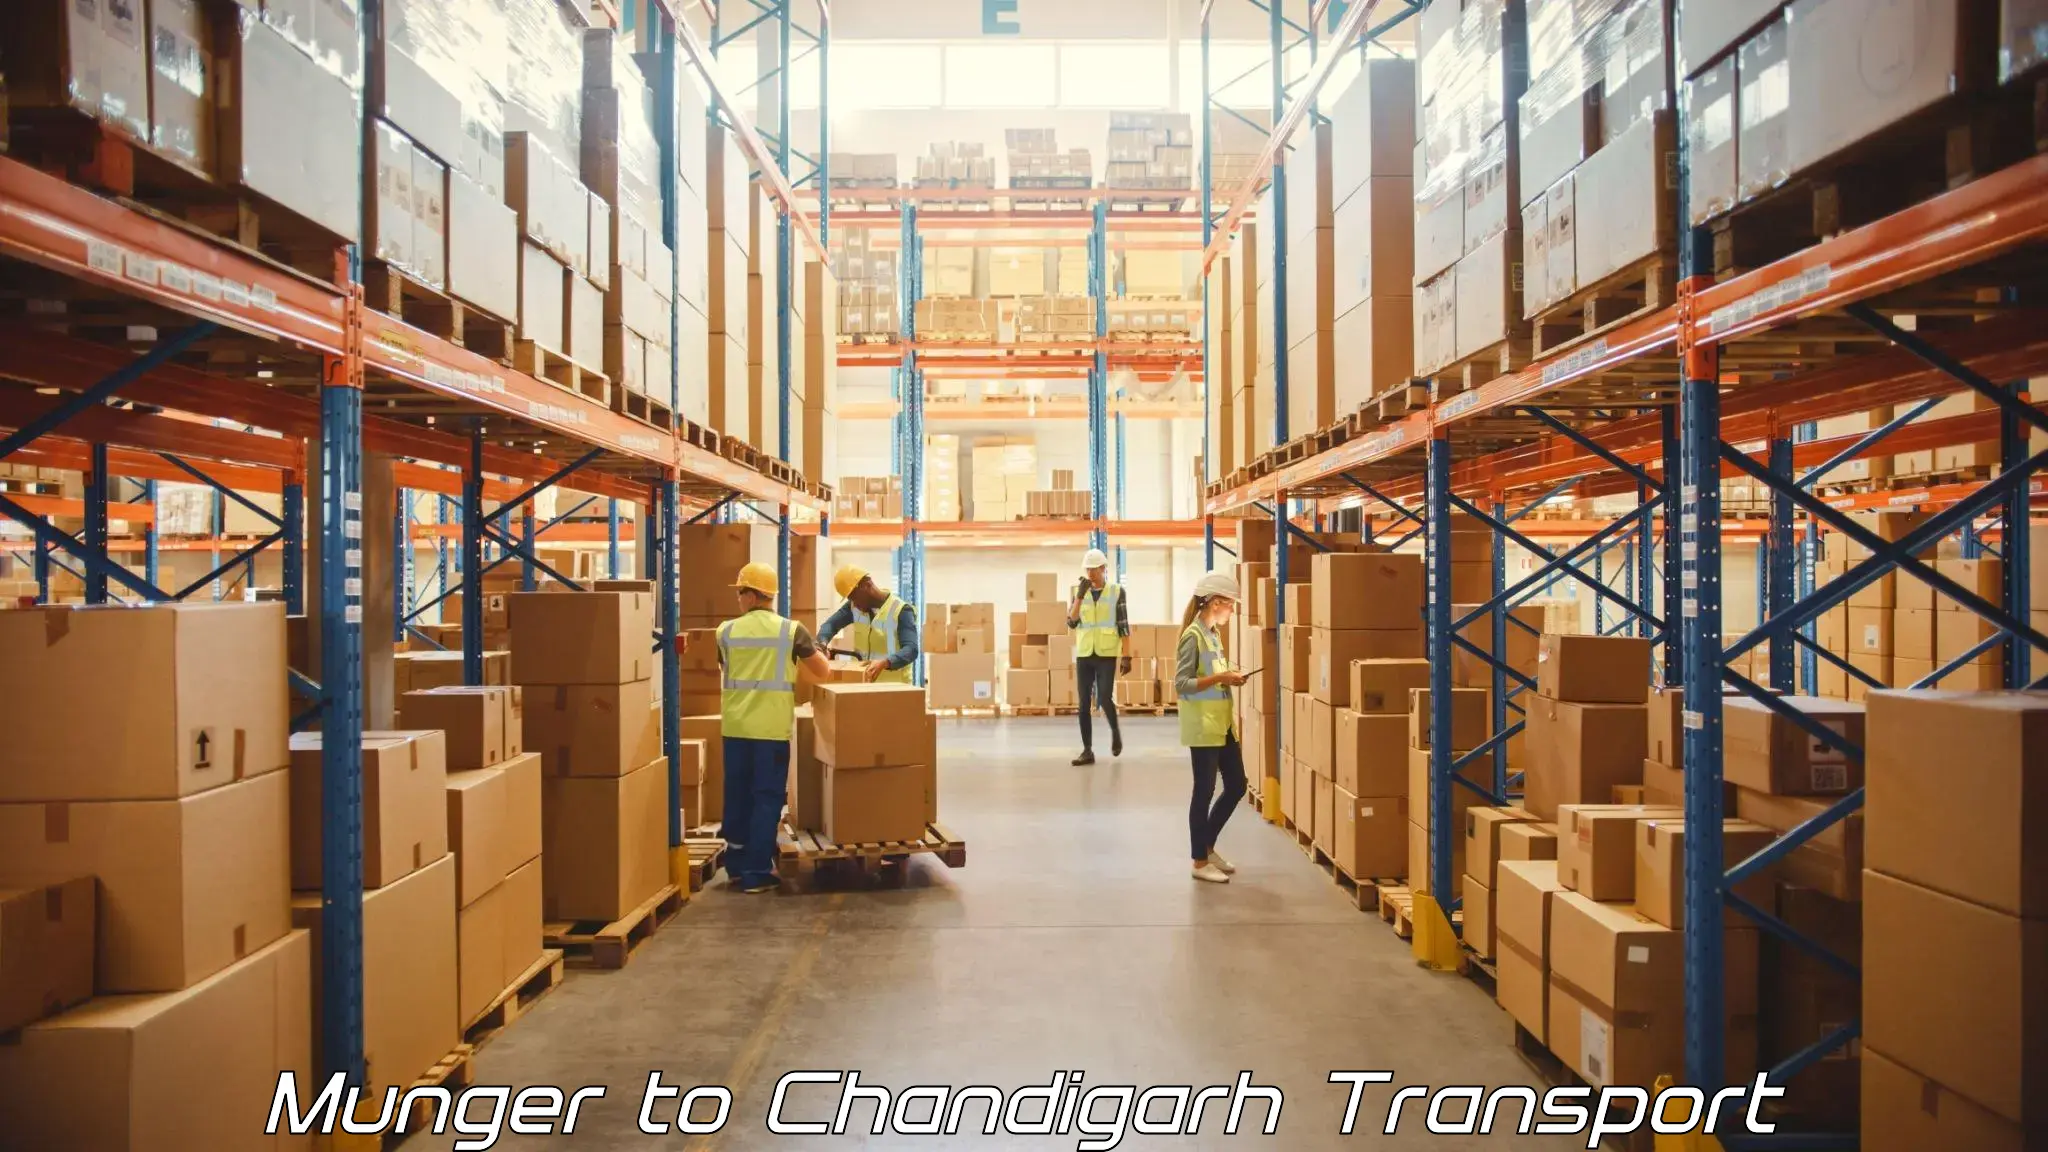 Transport in sharing Munger to Chandigarh